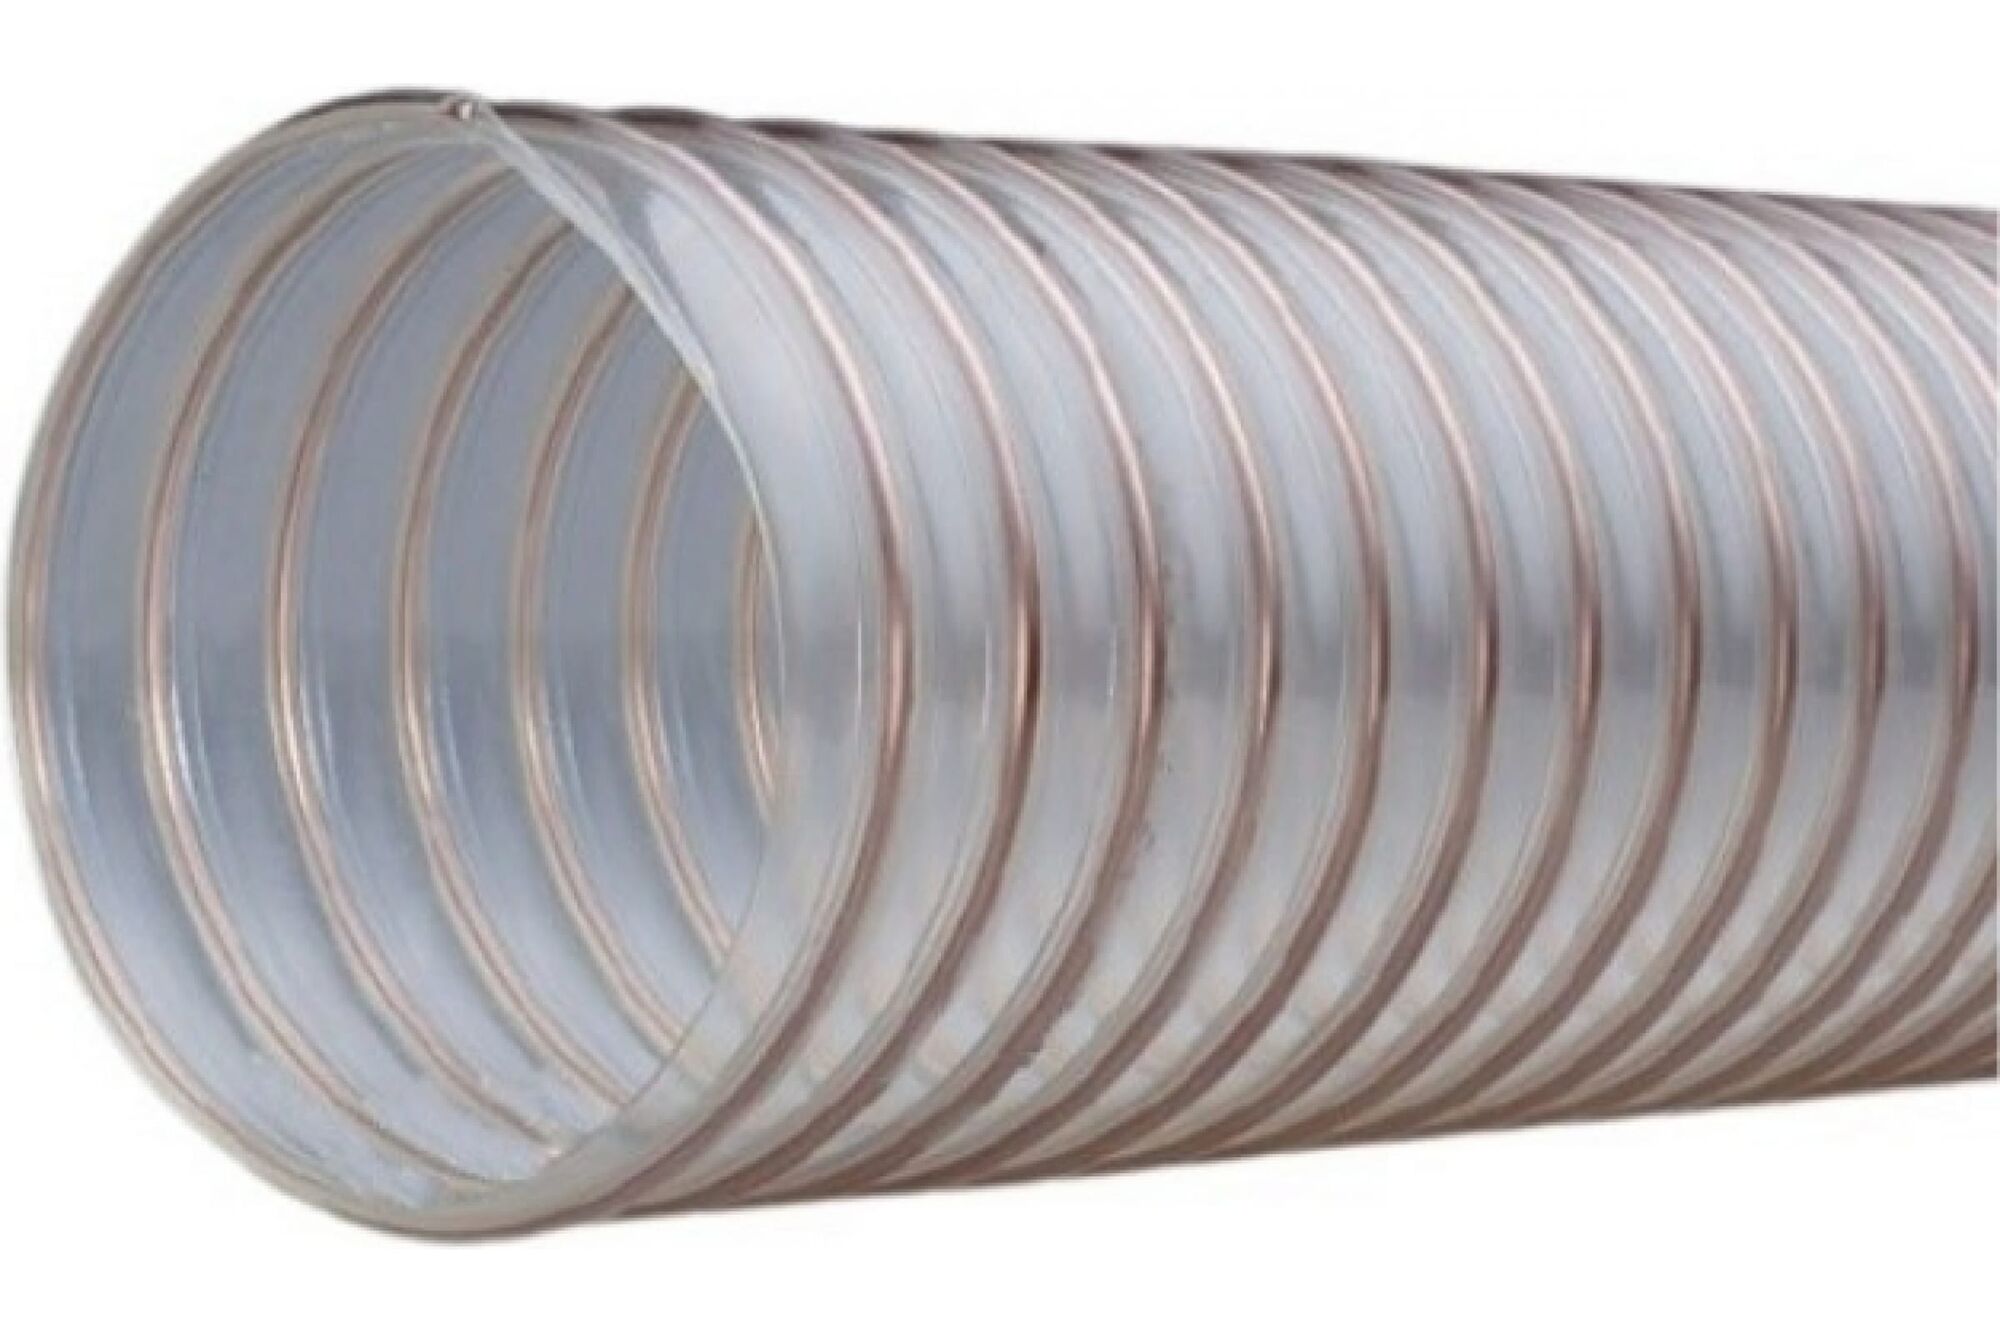 Полиуретановый шланг TITAN LOCK PU (толщ 0.6 мм) абразивостойкий 'KARELIA', внутренний диаметр 25 мм TL025KR06